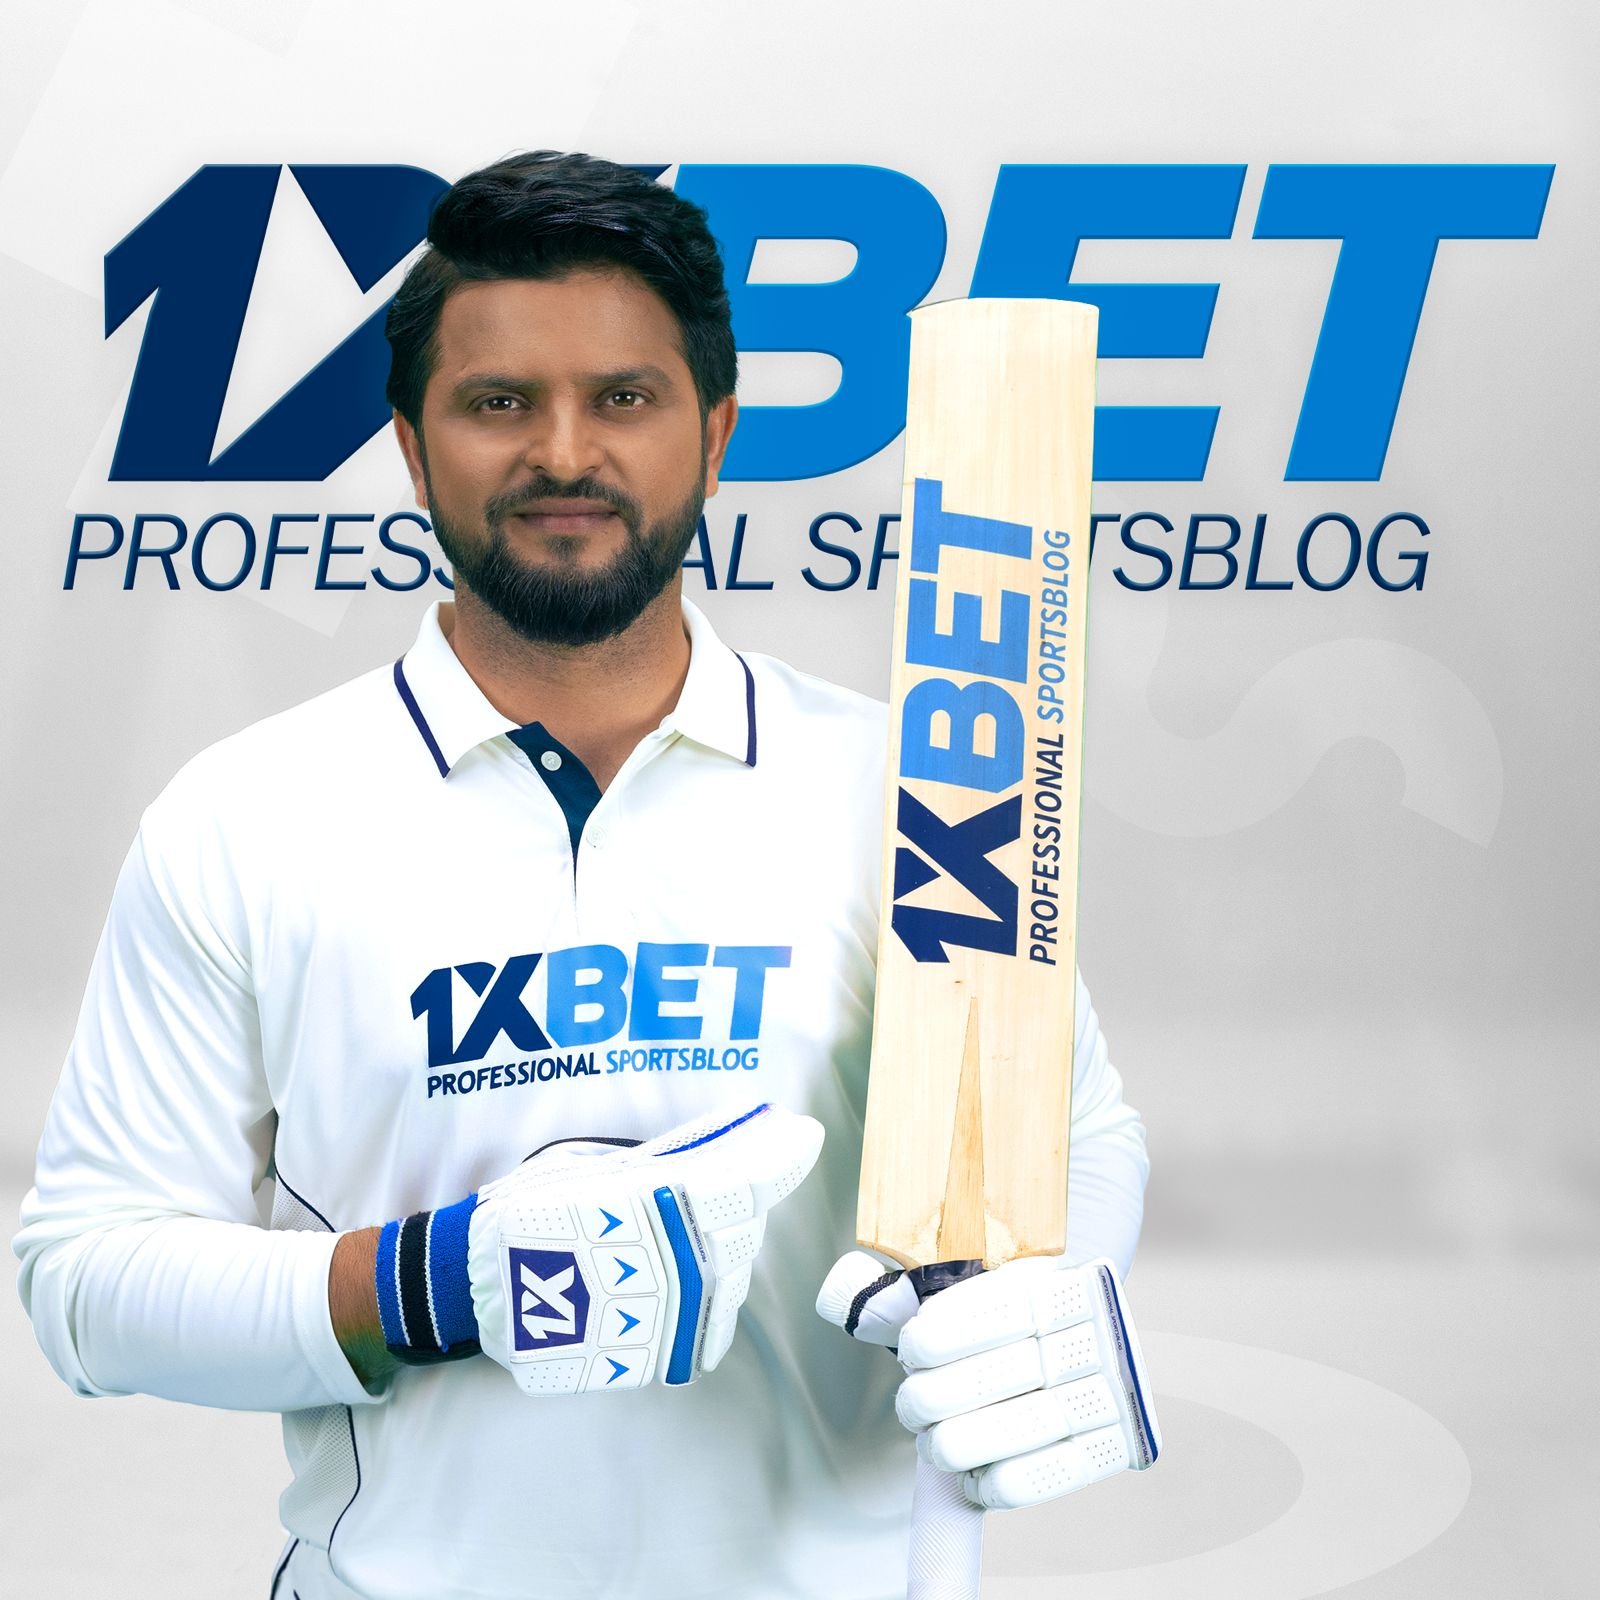 1xBet Professional Sportsblog and Suresh Raina